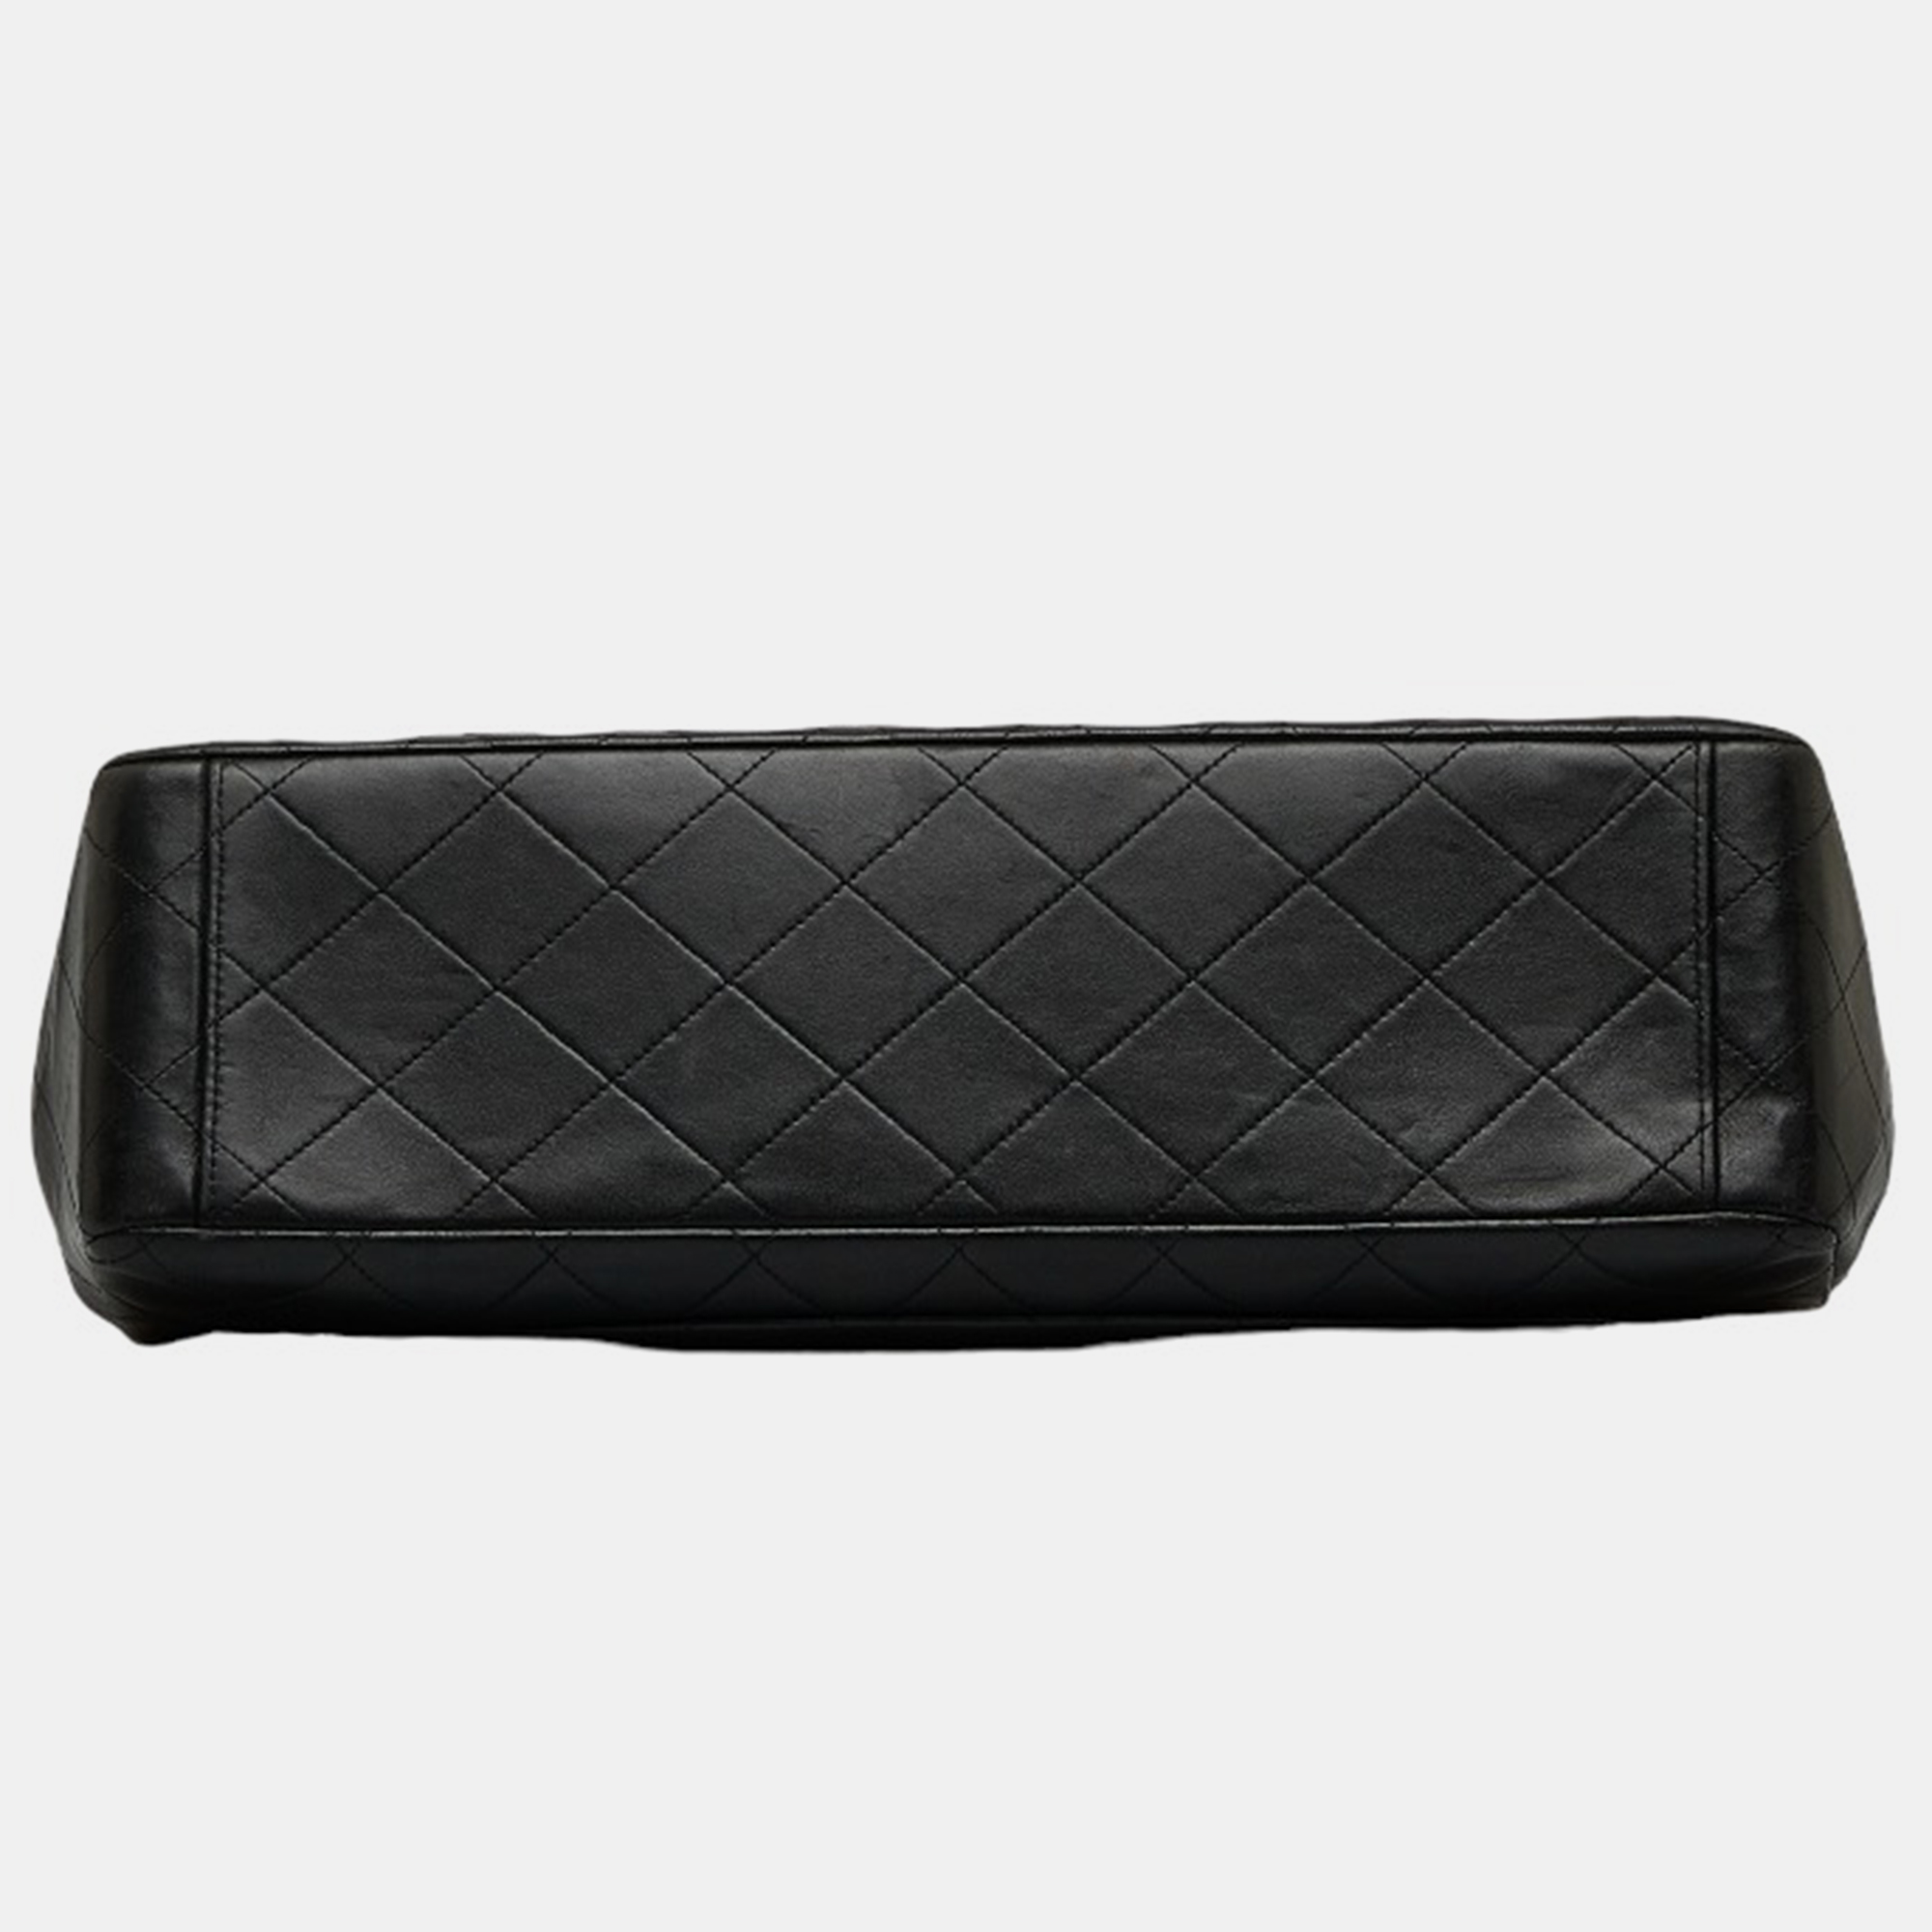 Chanel Black Leather Maxi Classic Single Flap Bag